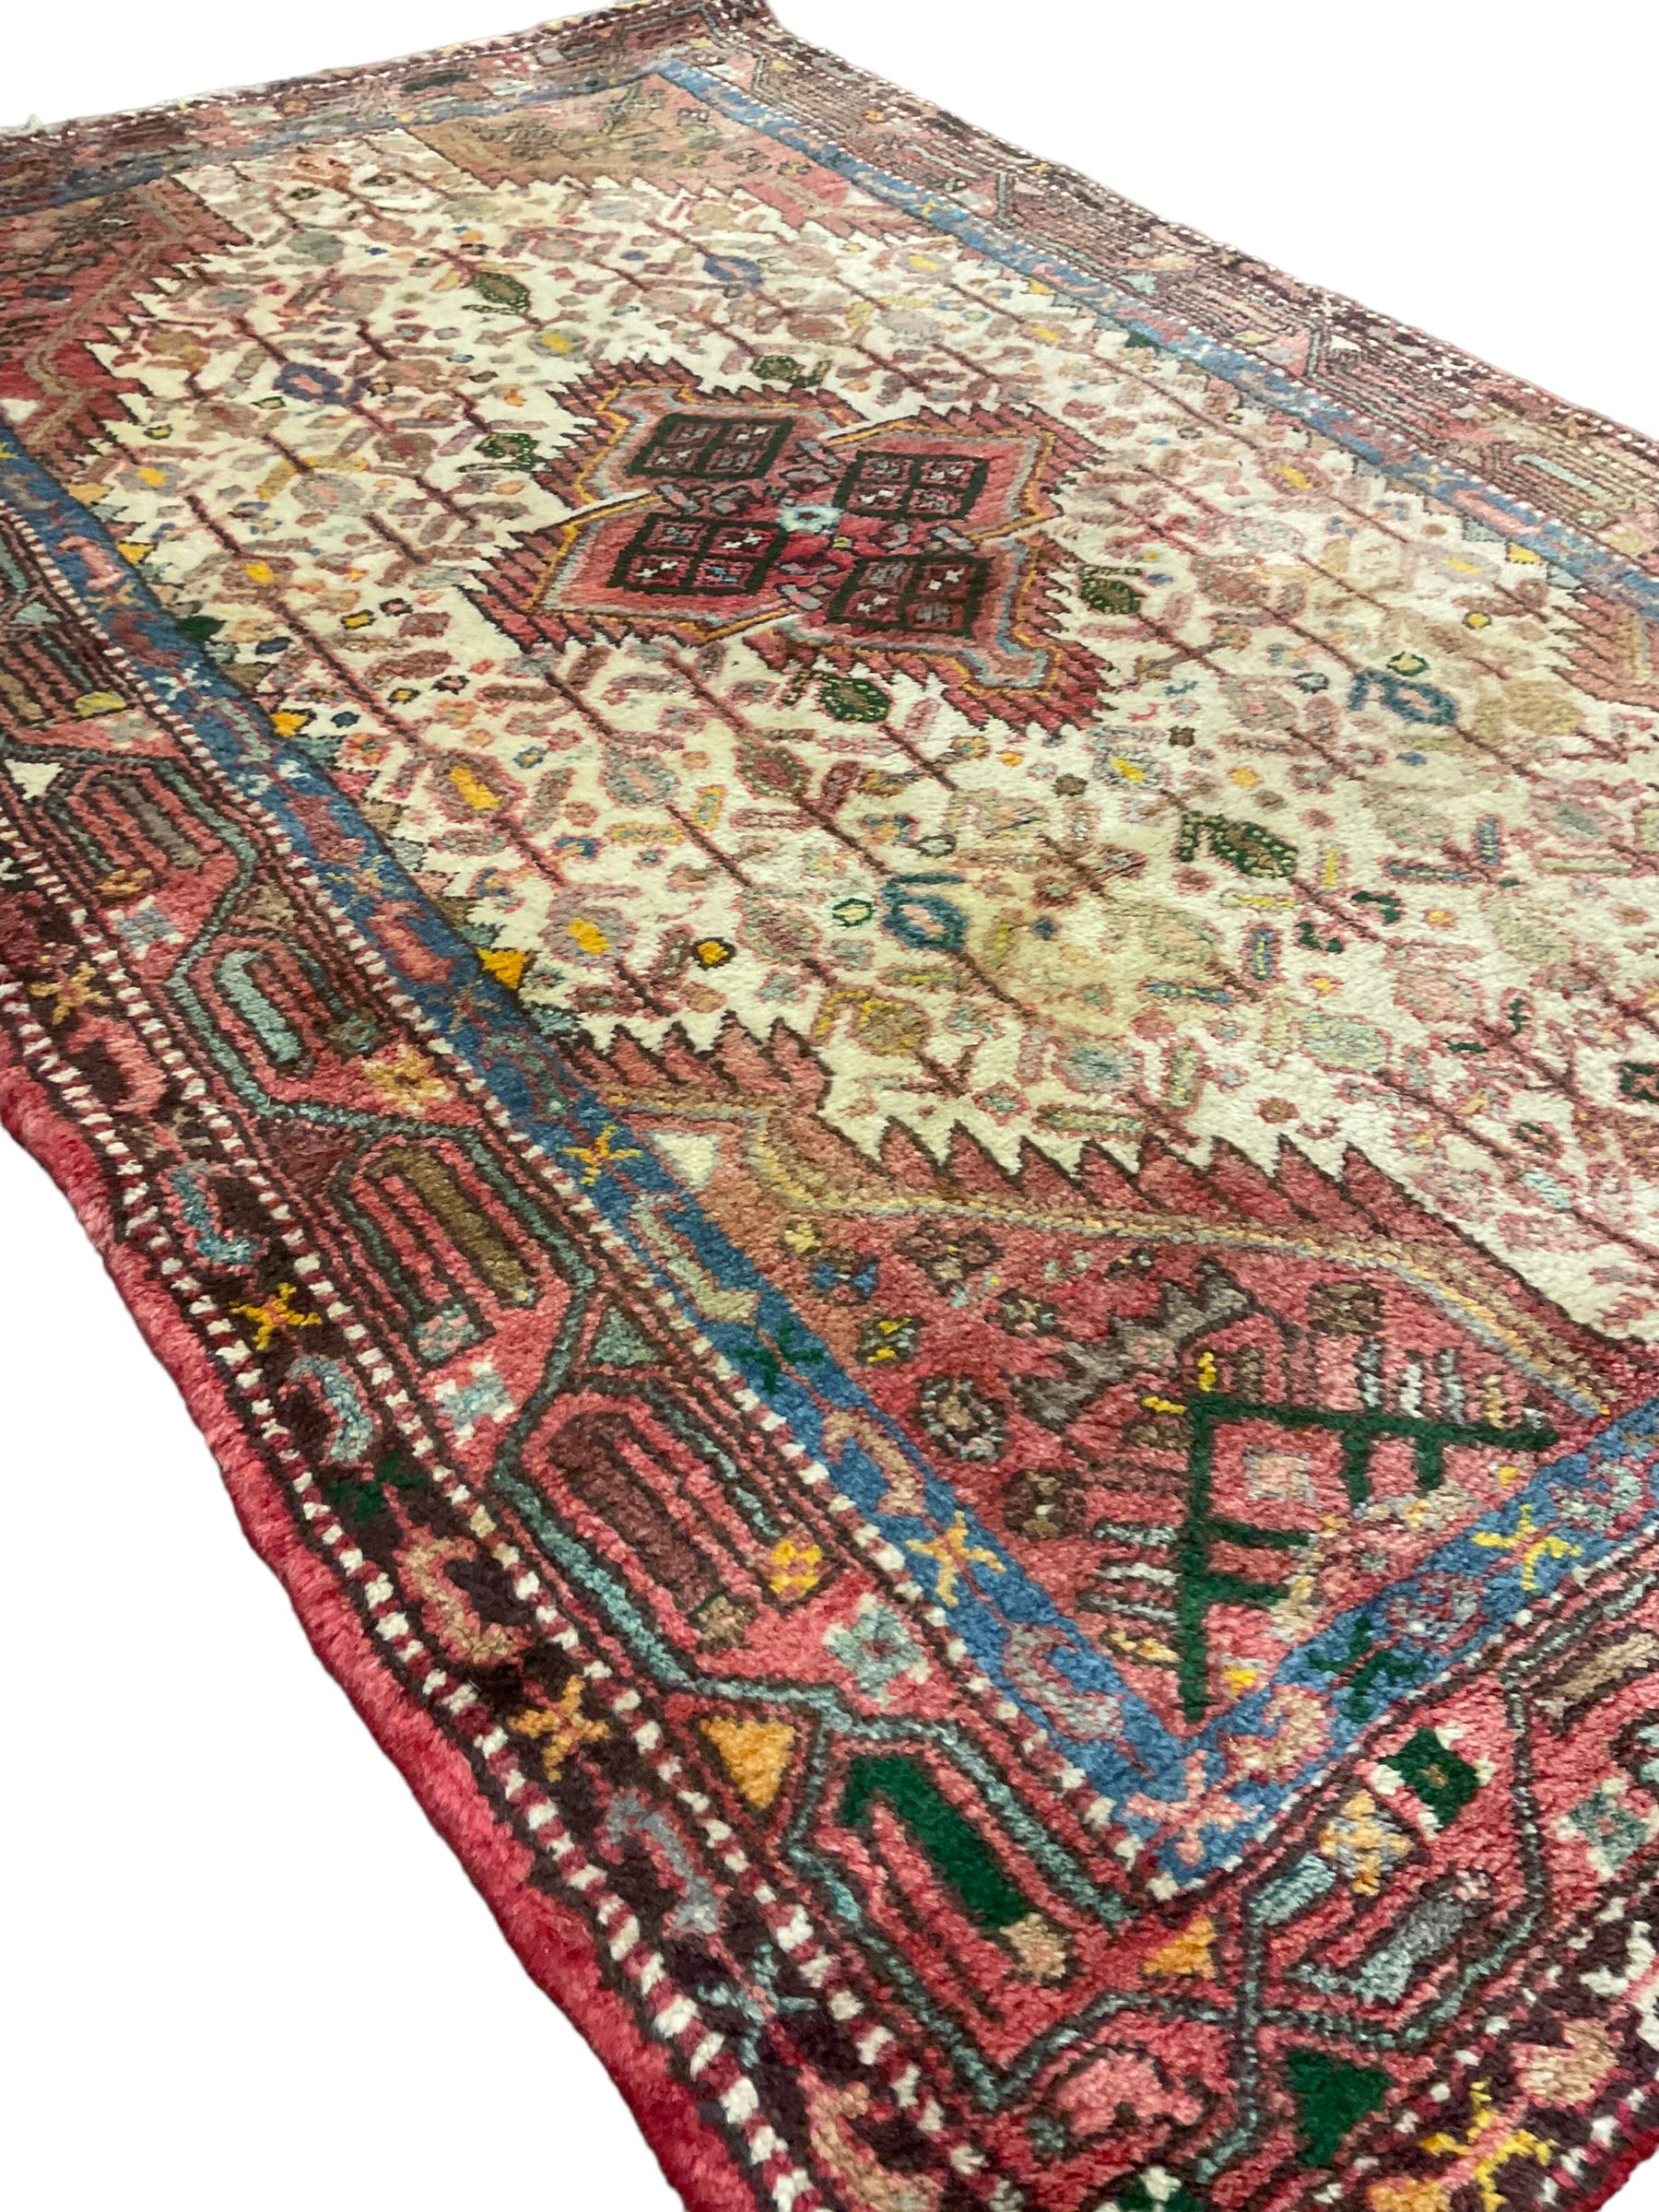 Small Persian rug - Image 3 of 6